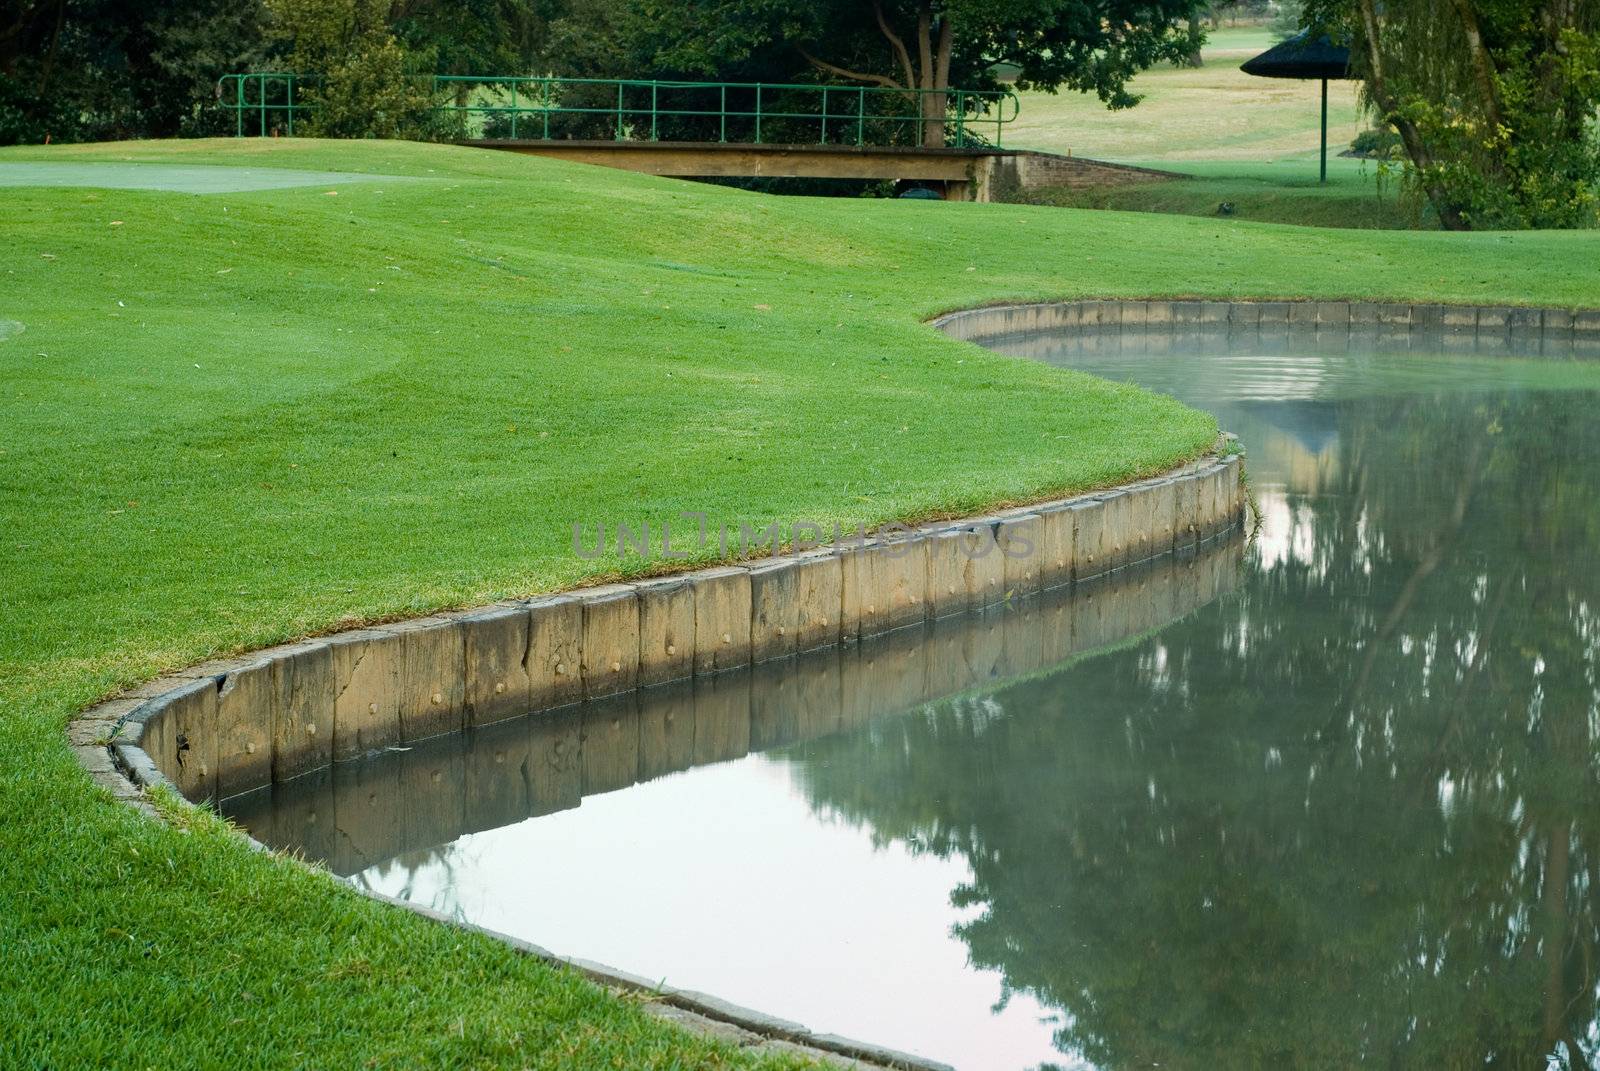 Golf putting green and water hazard pond